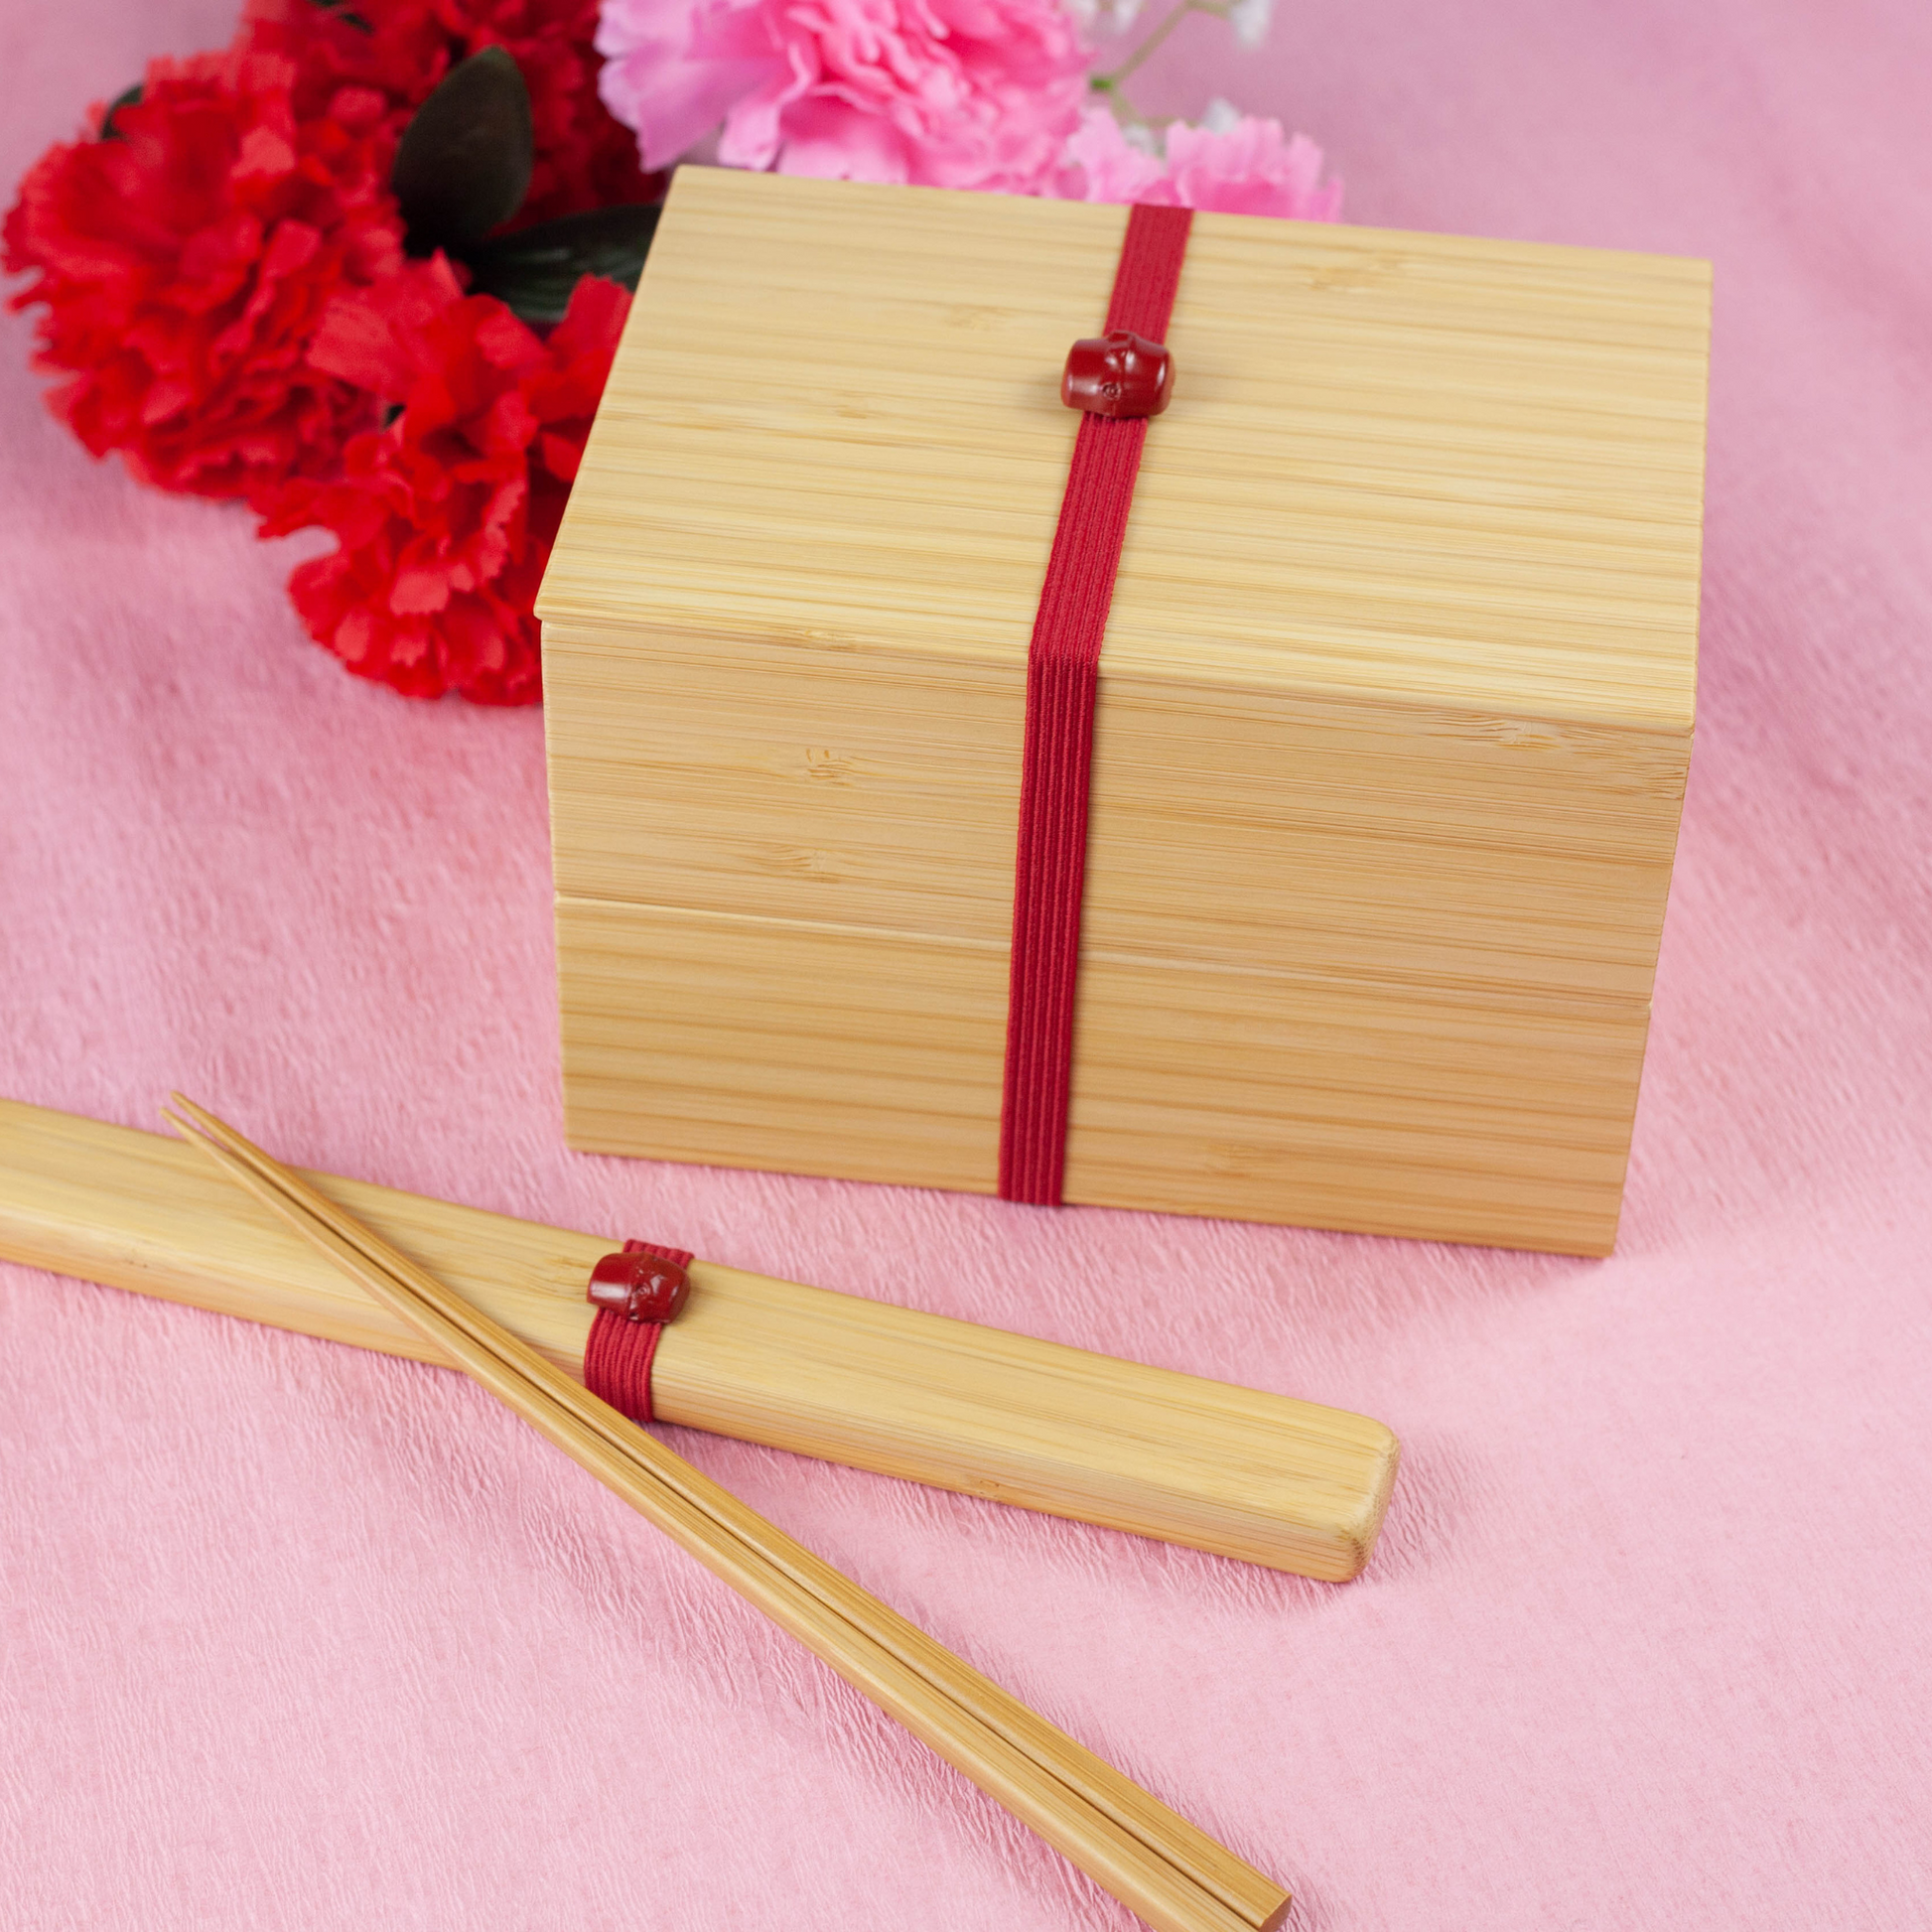 Natural Bamboo Bento Box / Japanese Lunch Box / Handmade by Craftsmen /  Made in Japan / for Gifts and Homes -  Hong Kong